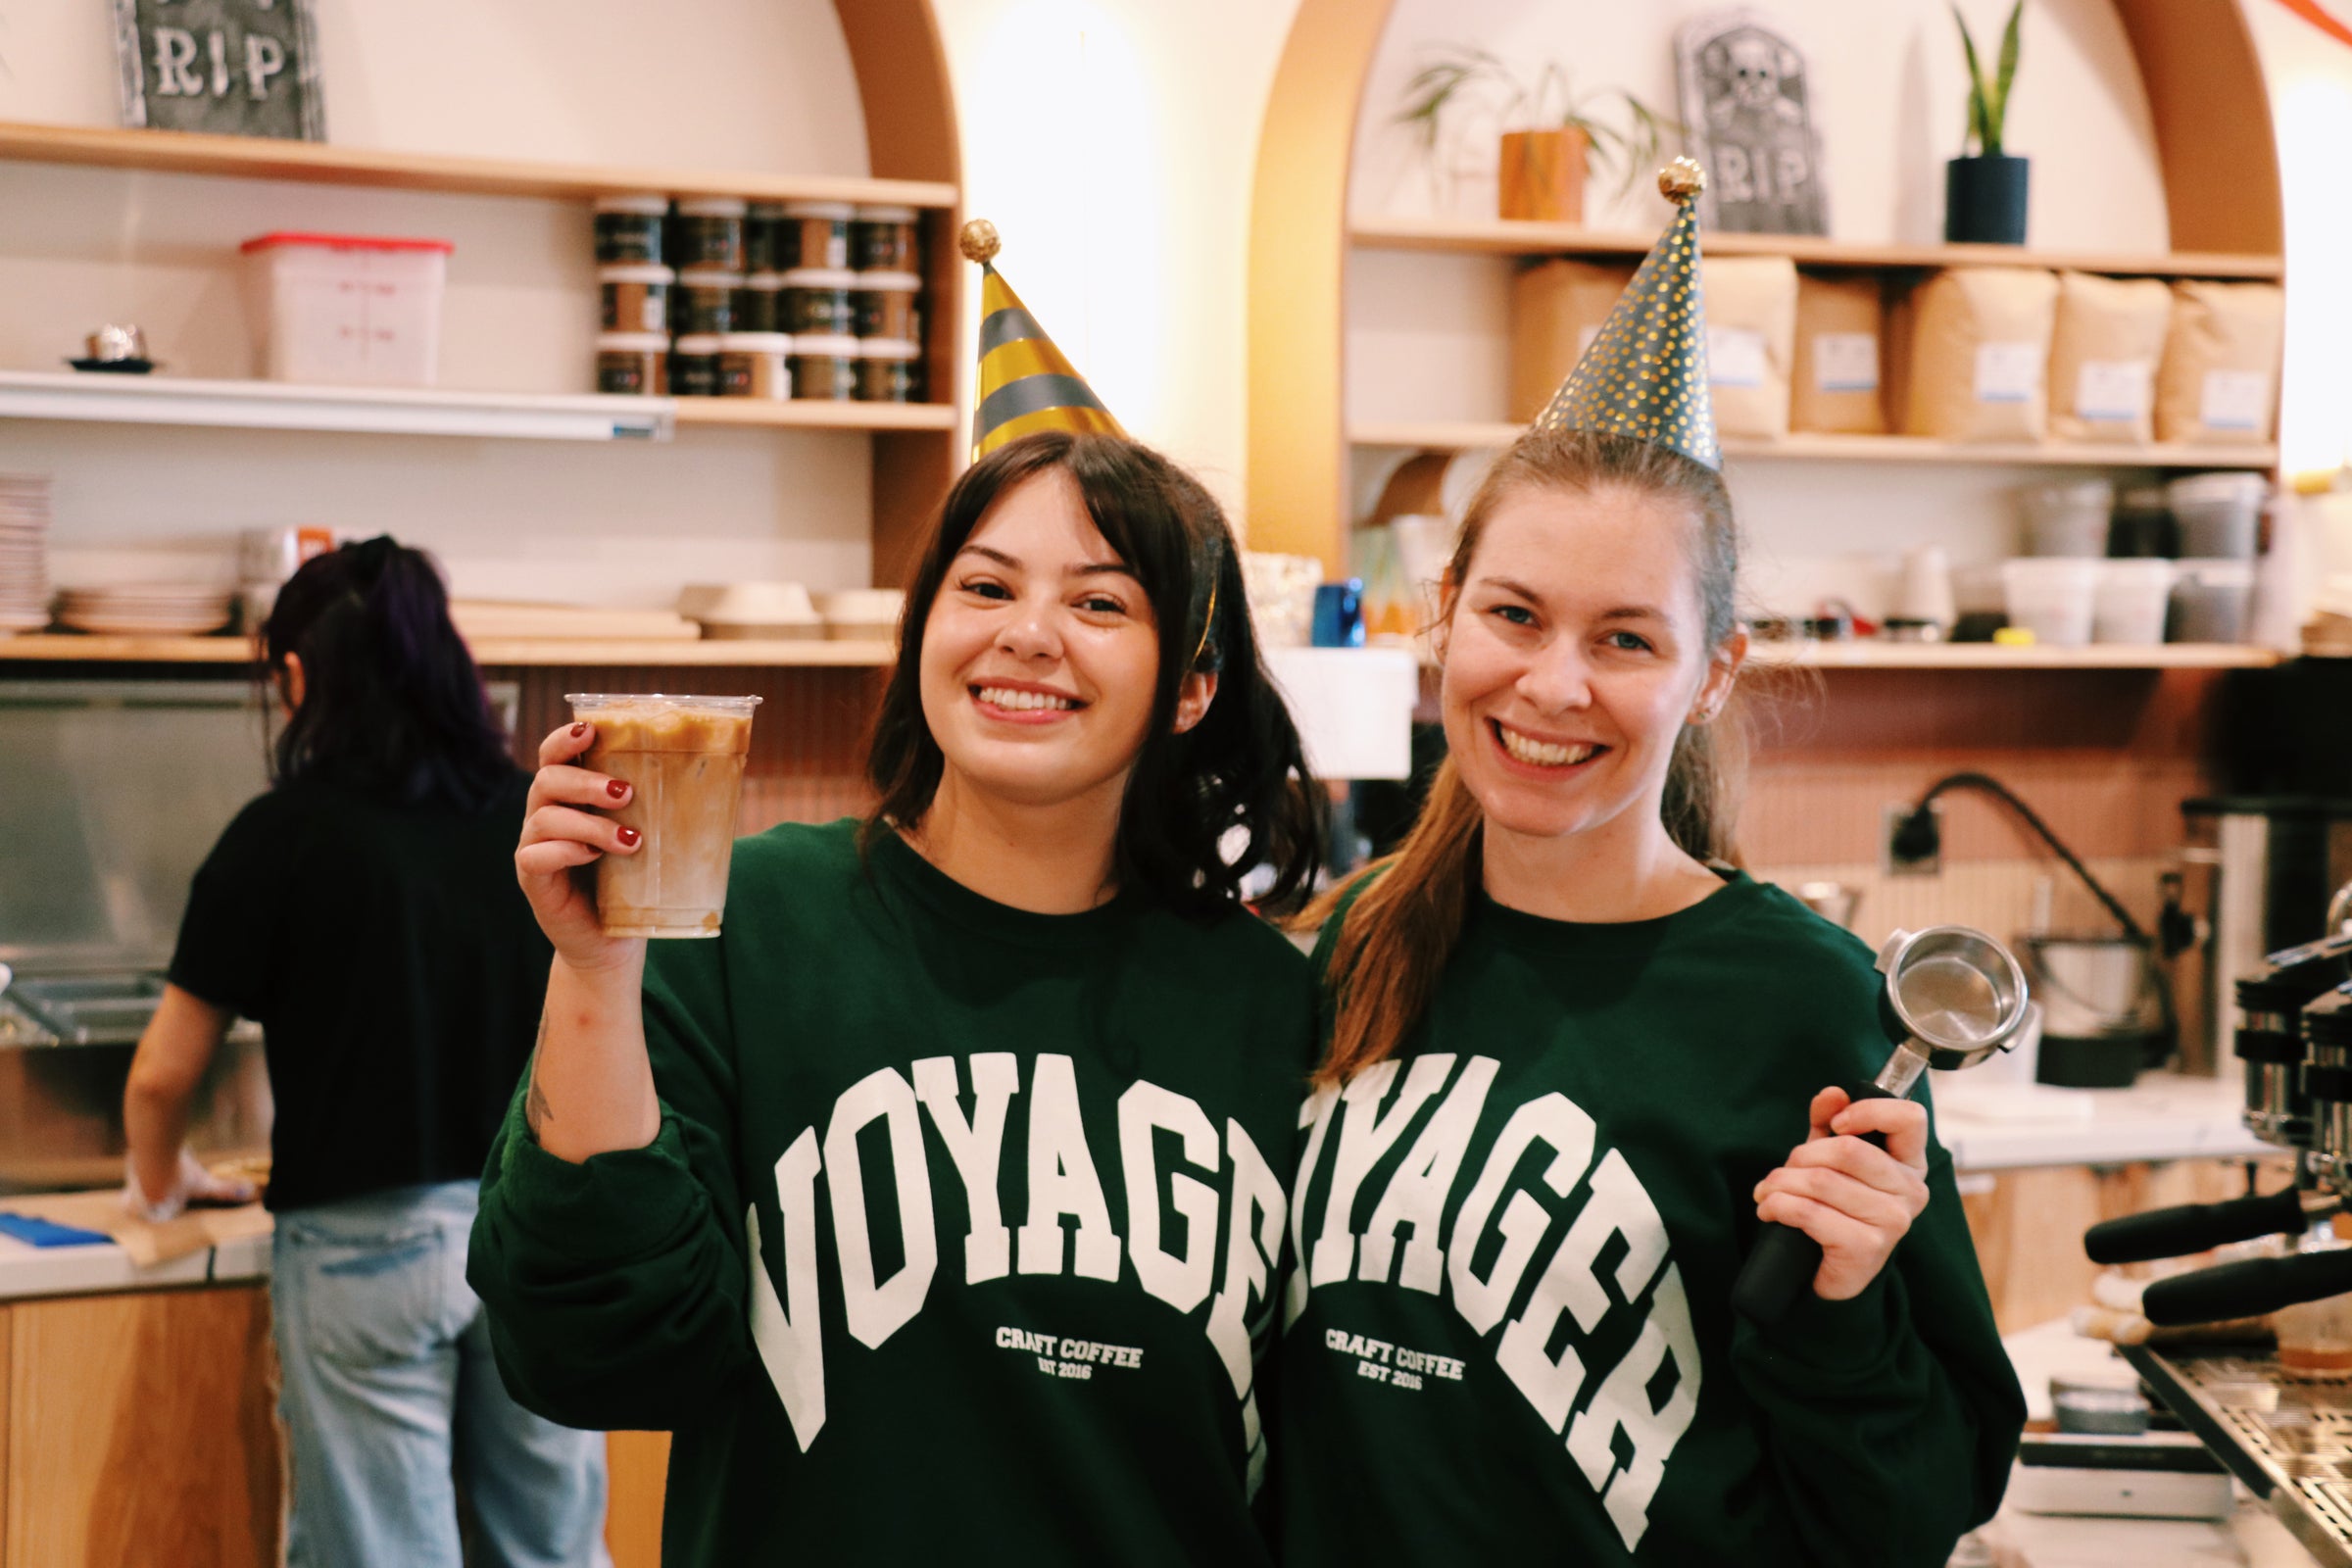 Voyager Craft Coffee: The Original - Studio BANAA